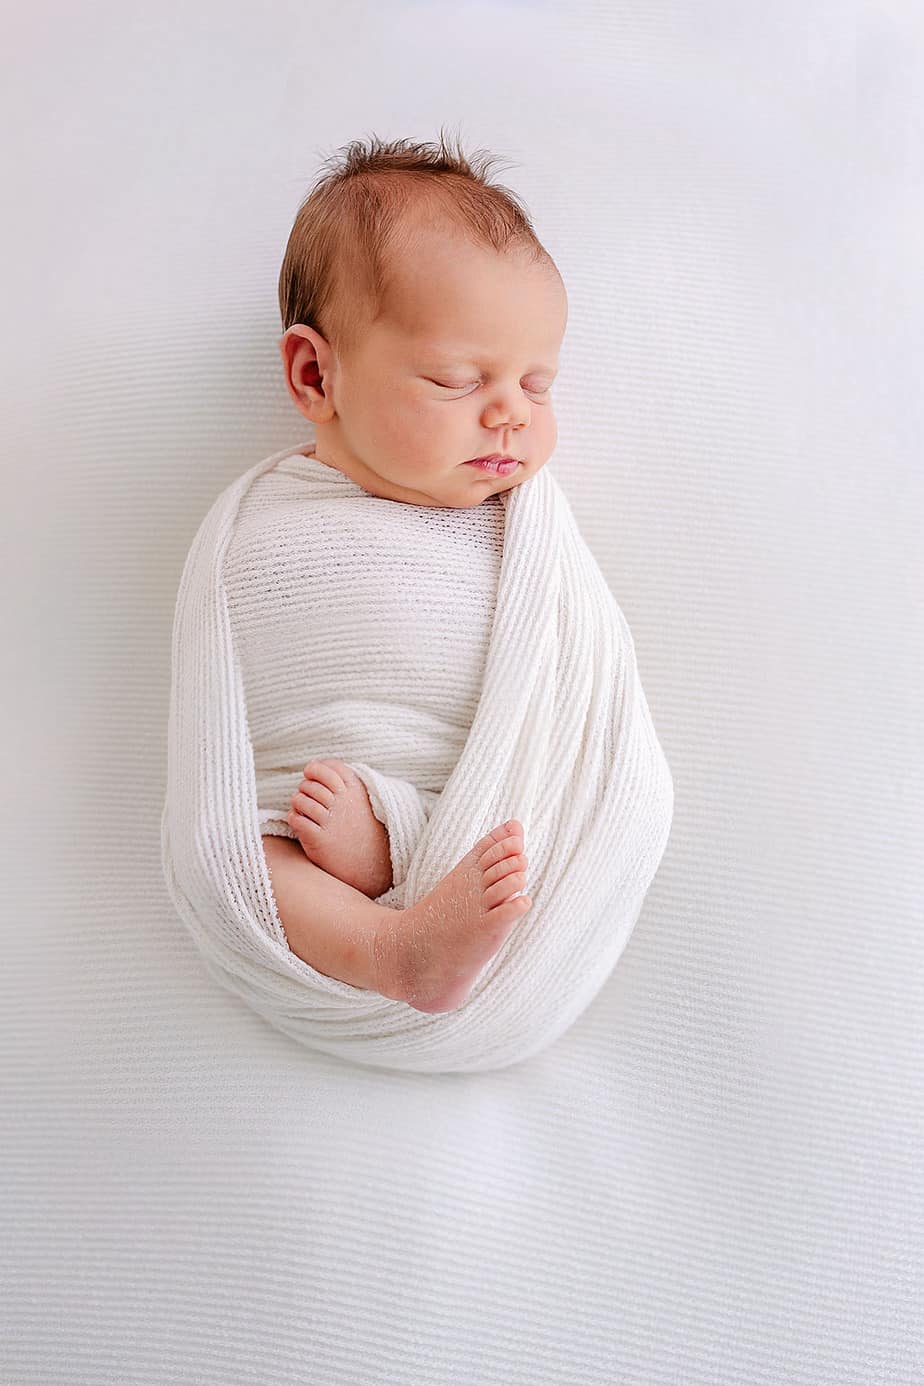 wrapped newborn baby in Pensacola FL studio